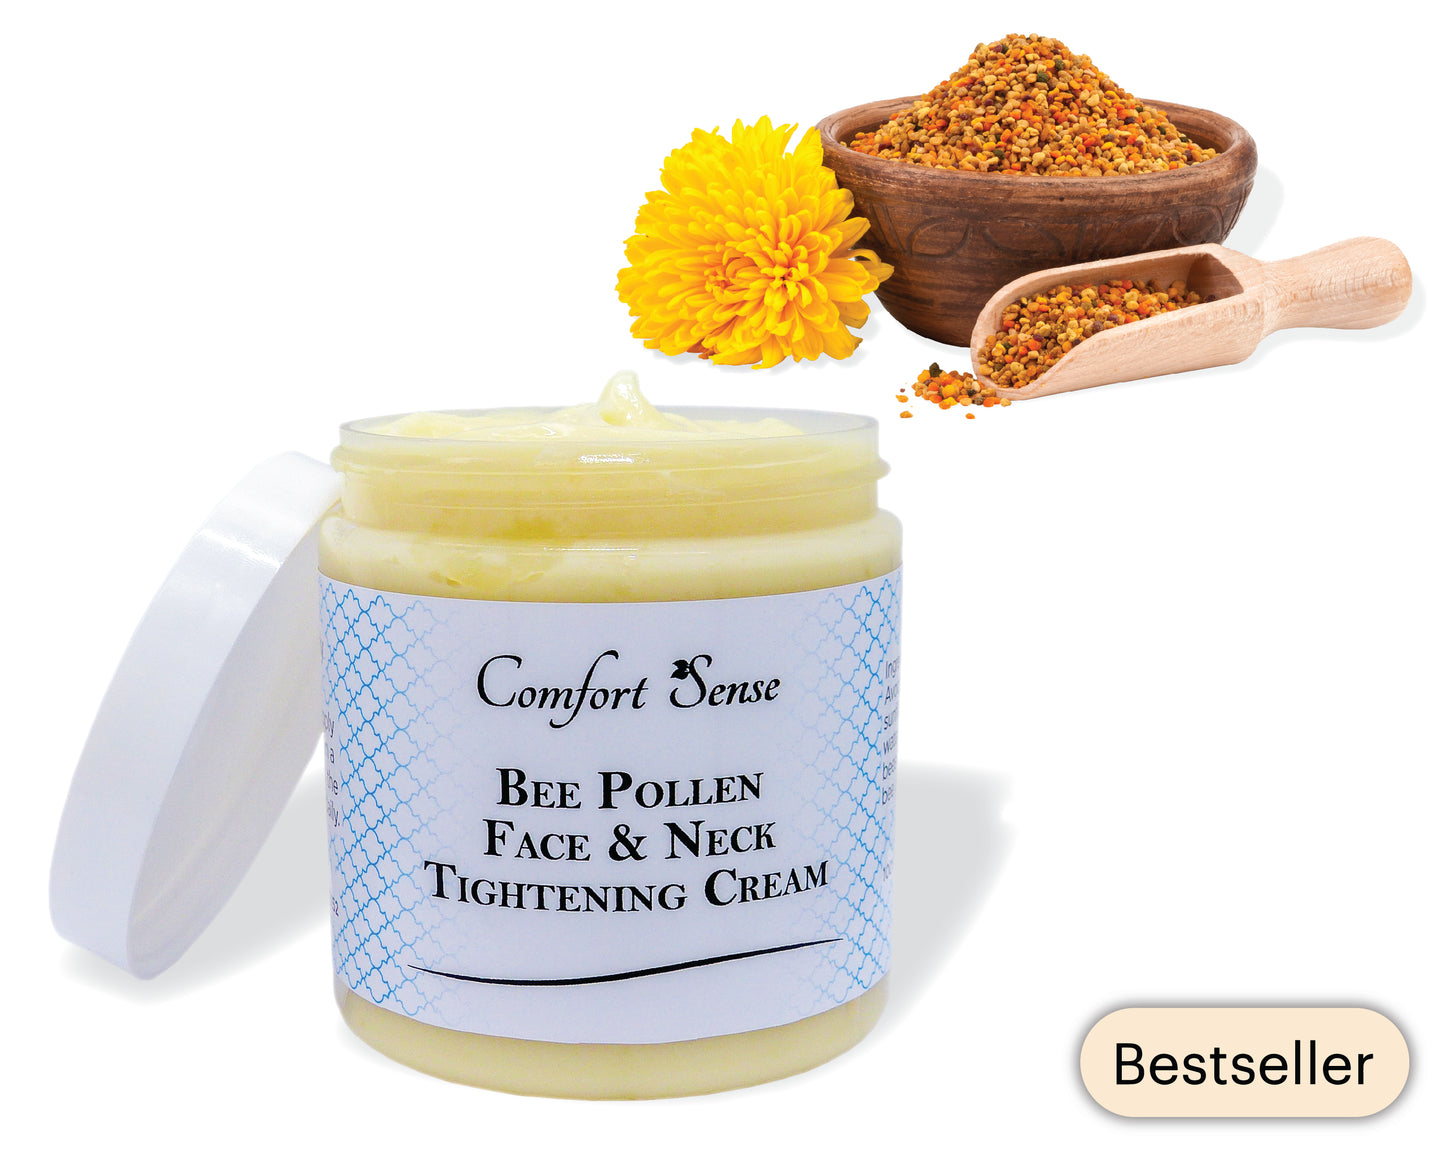 Bee Pollen Face & Neck Tightening Cream